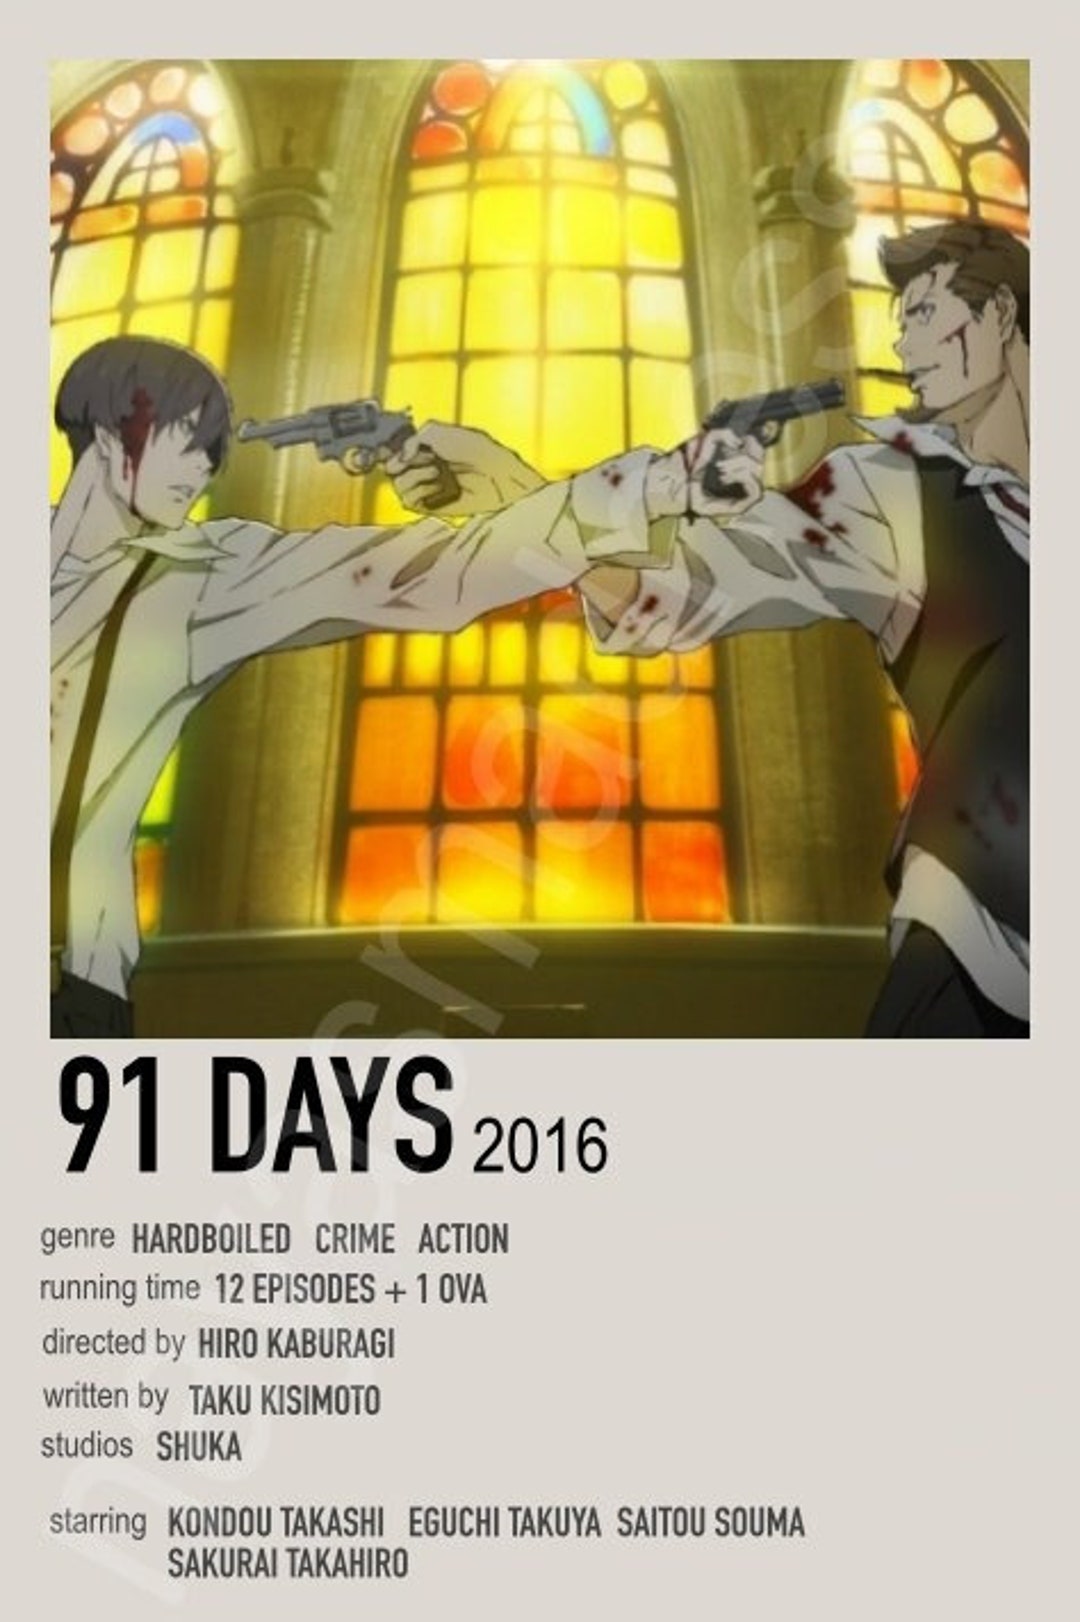 91 Days by Shuka Studios